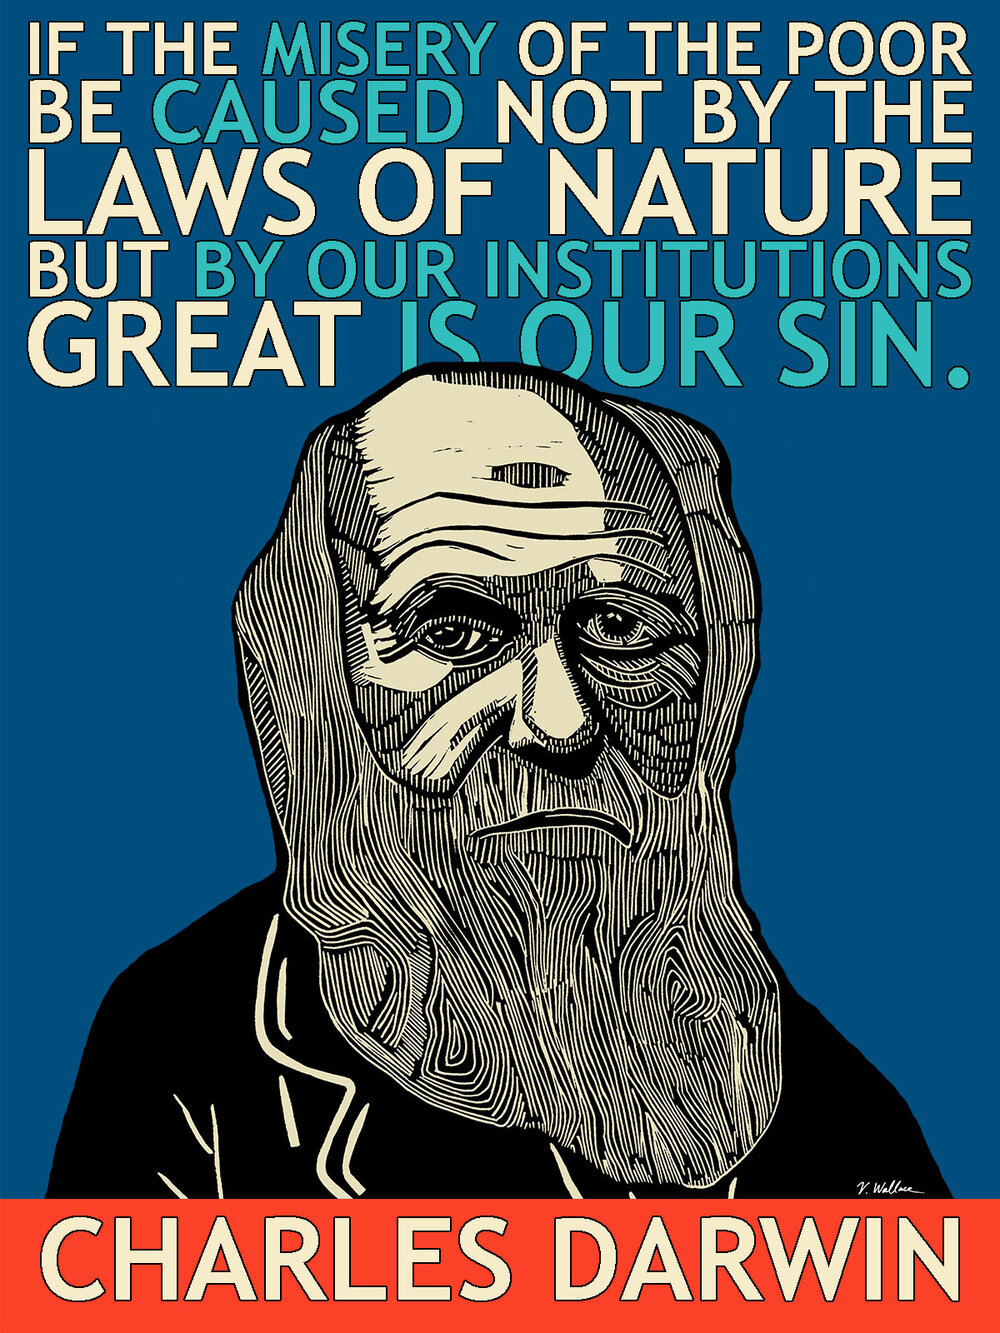 Charles Darwin small Poster.jpg